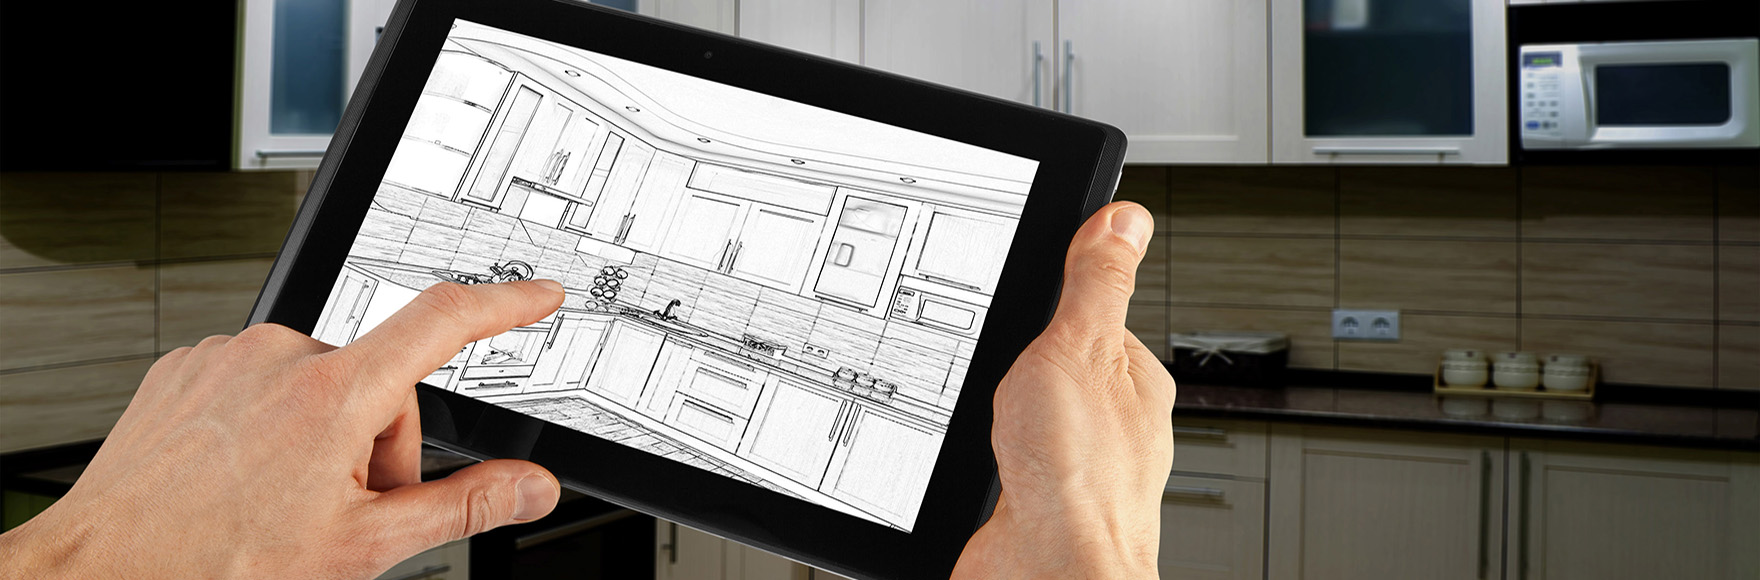 interior design blueprint on an iPad